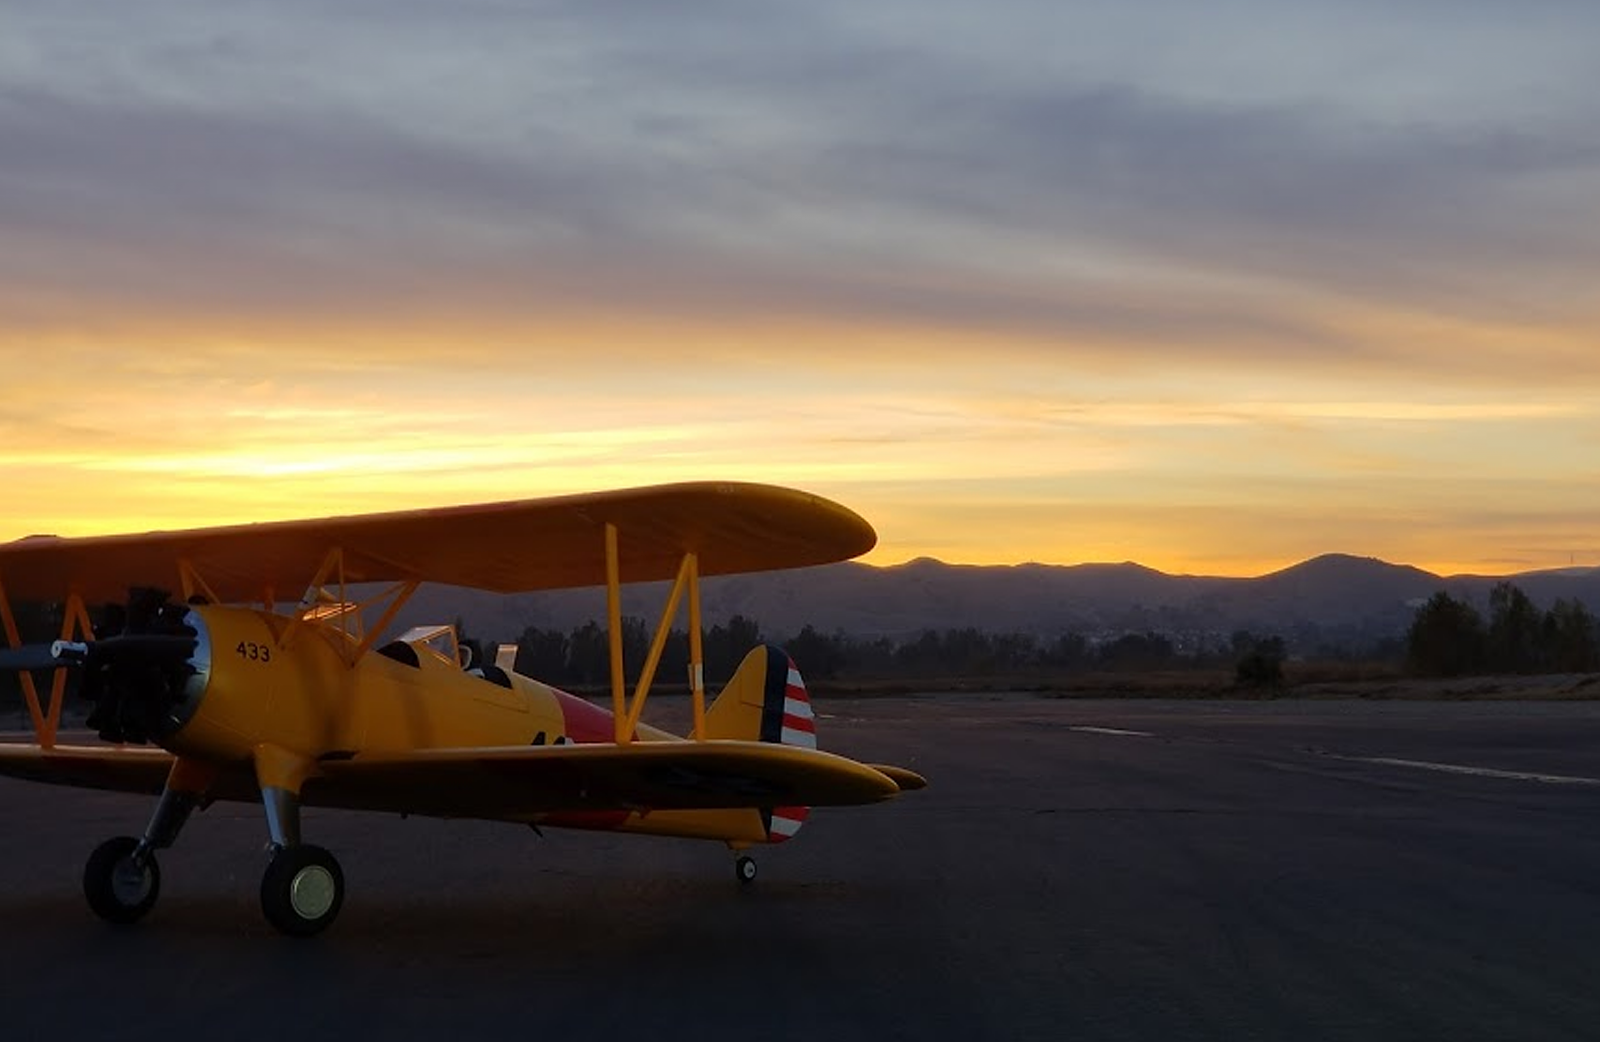 A closeup of a model airplane on the Prado park airfield at dusk.